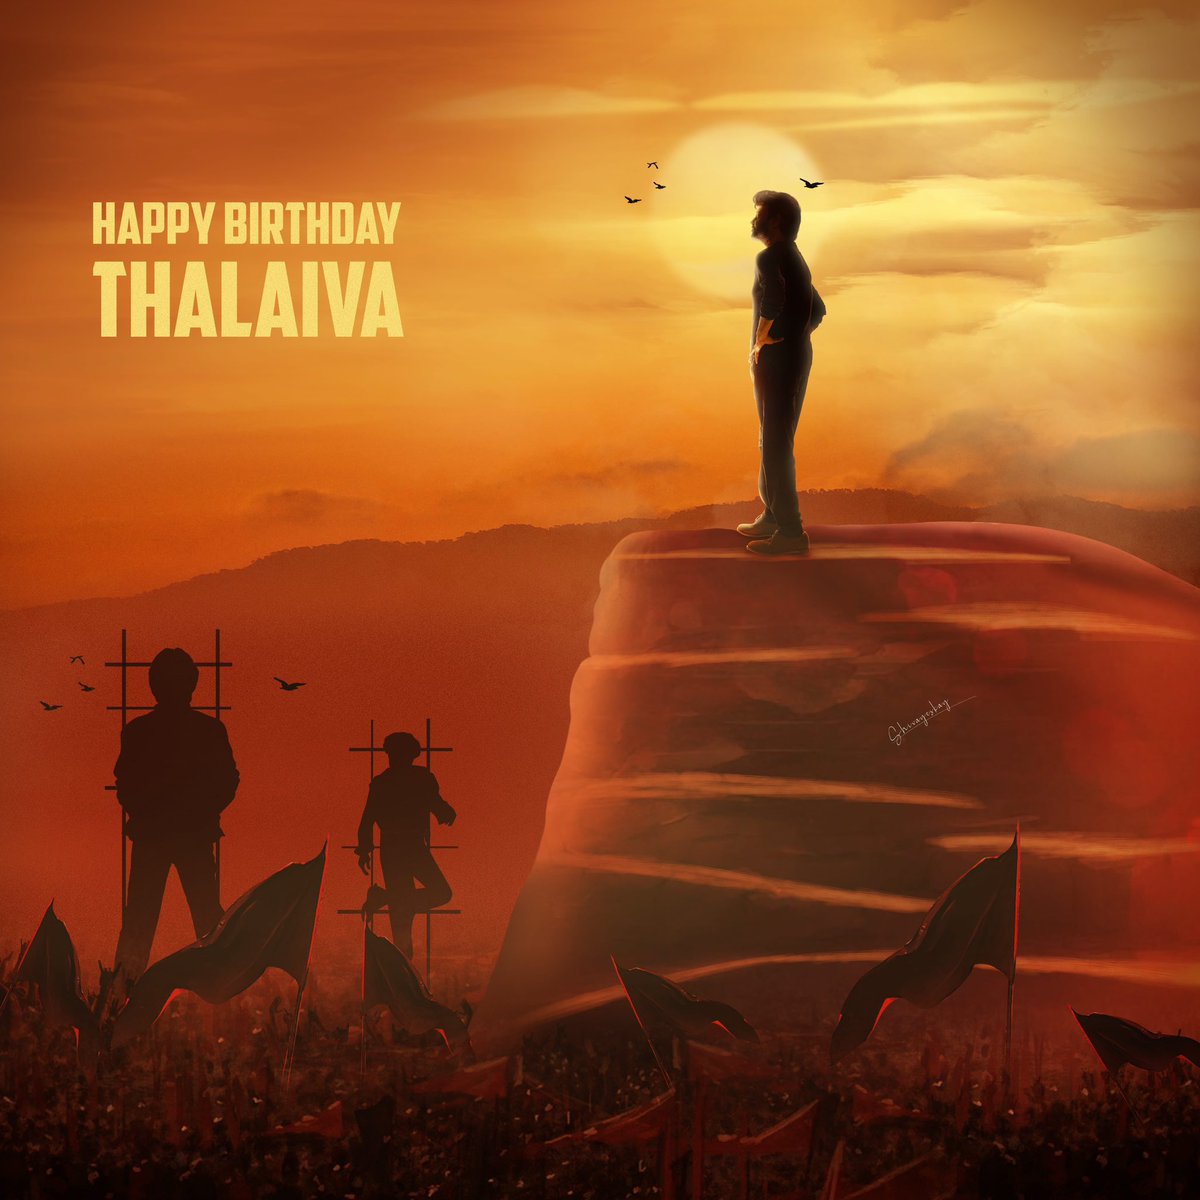 Happy birthday #Thalaivaa ❤️❤️

#HBDSuperstarRajinikanth #HBDRajinikanth